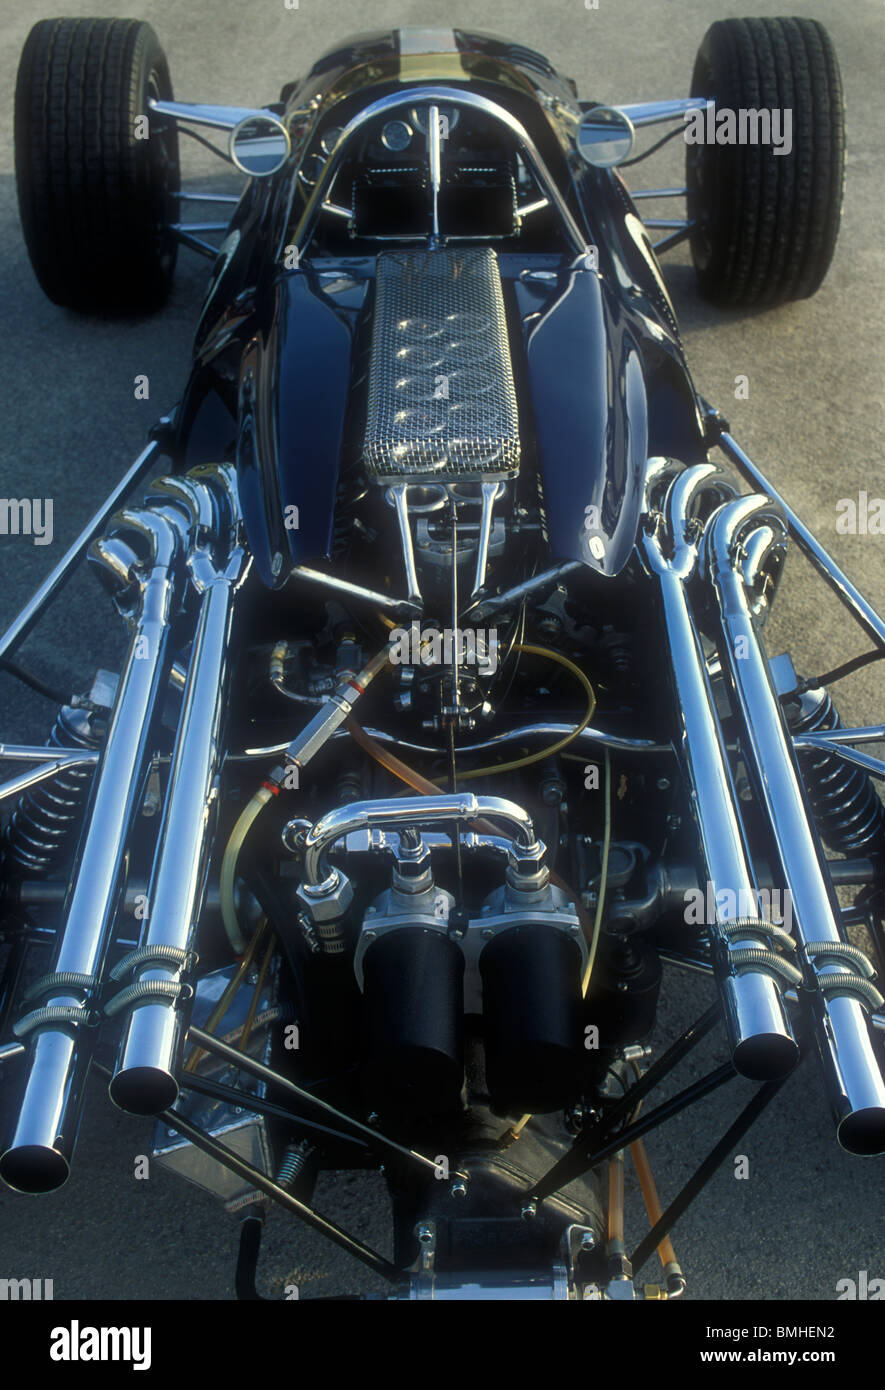 Anglo-American Racing Eagle F1 Auto 1967 zeigt Weslake V12-Motor  Stockfotografie - Alamy